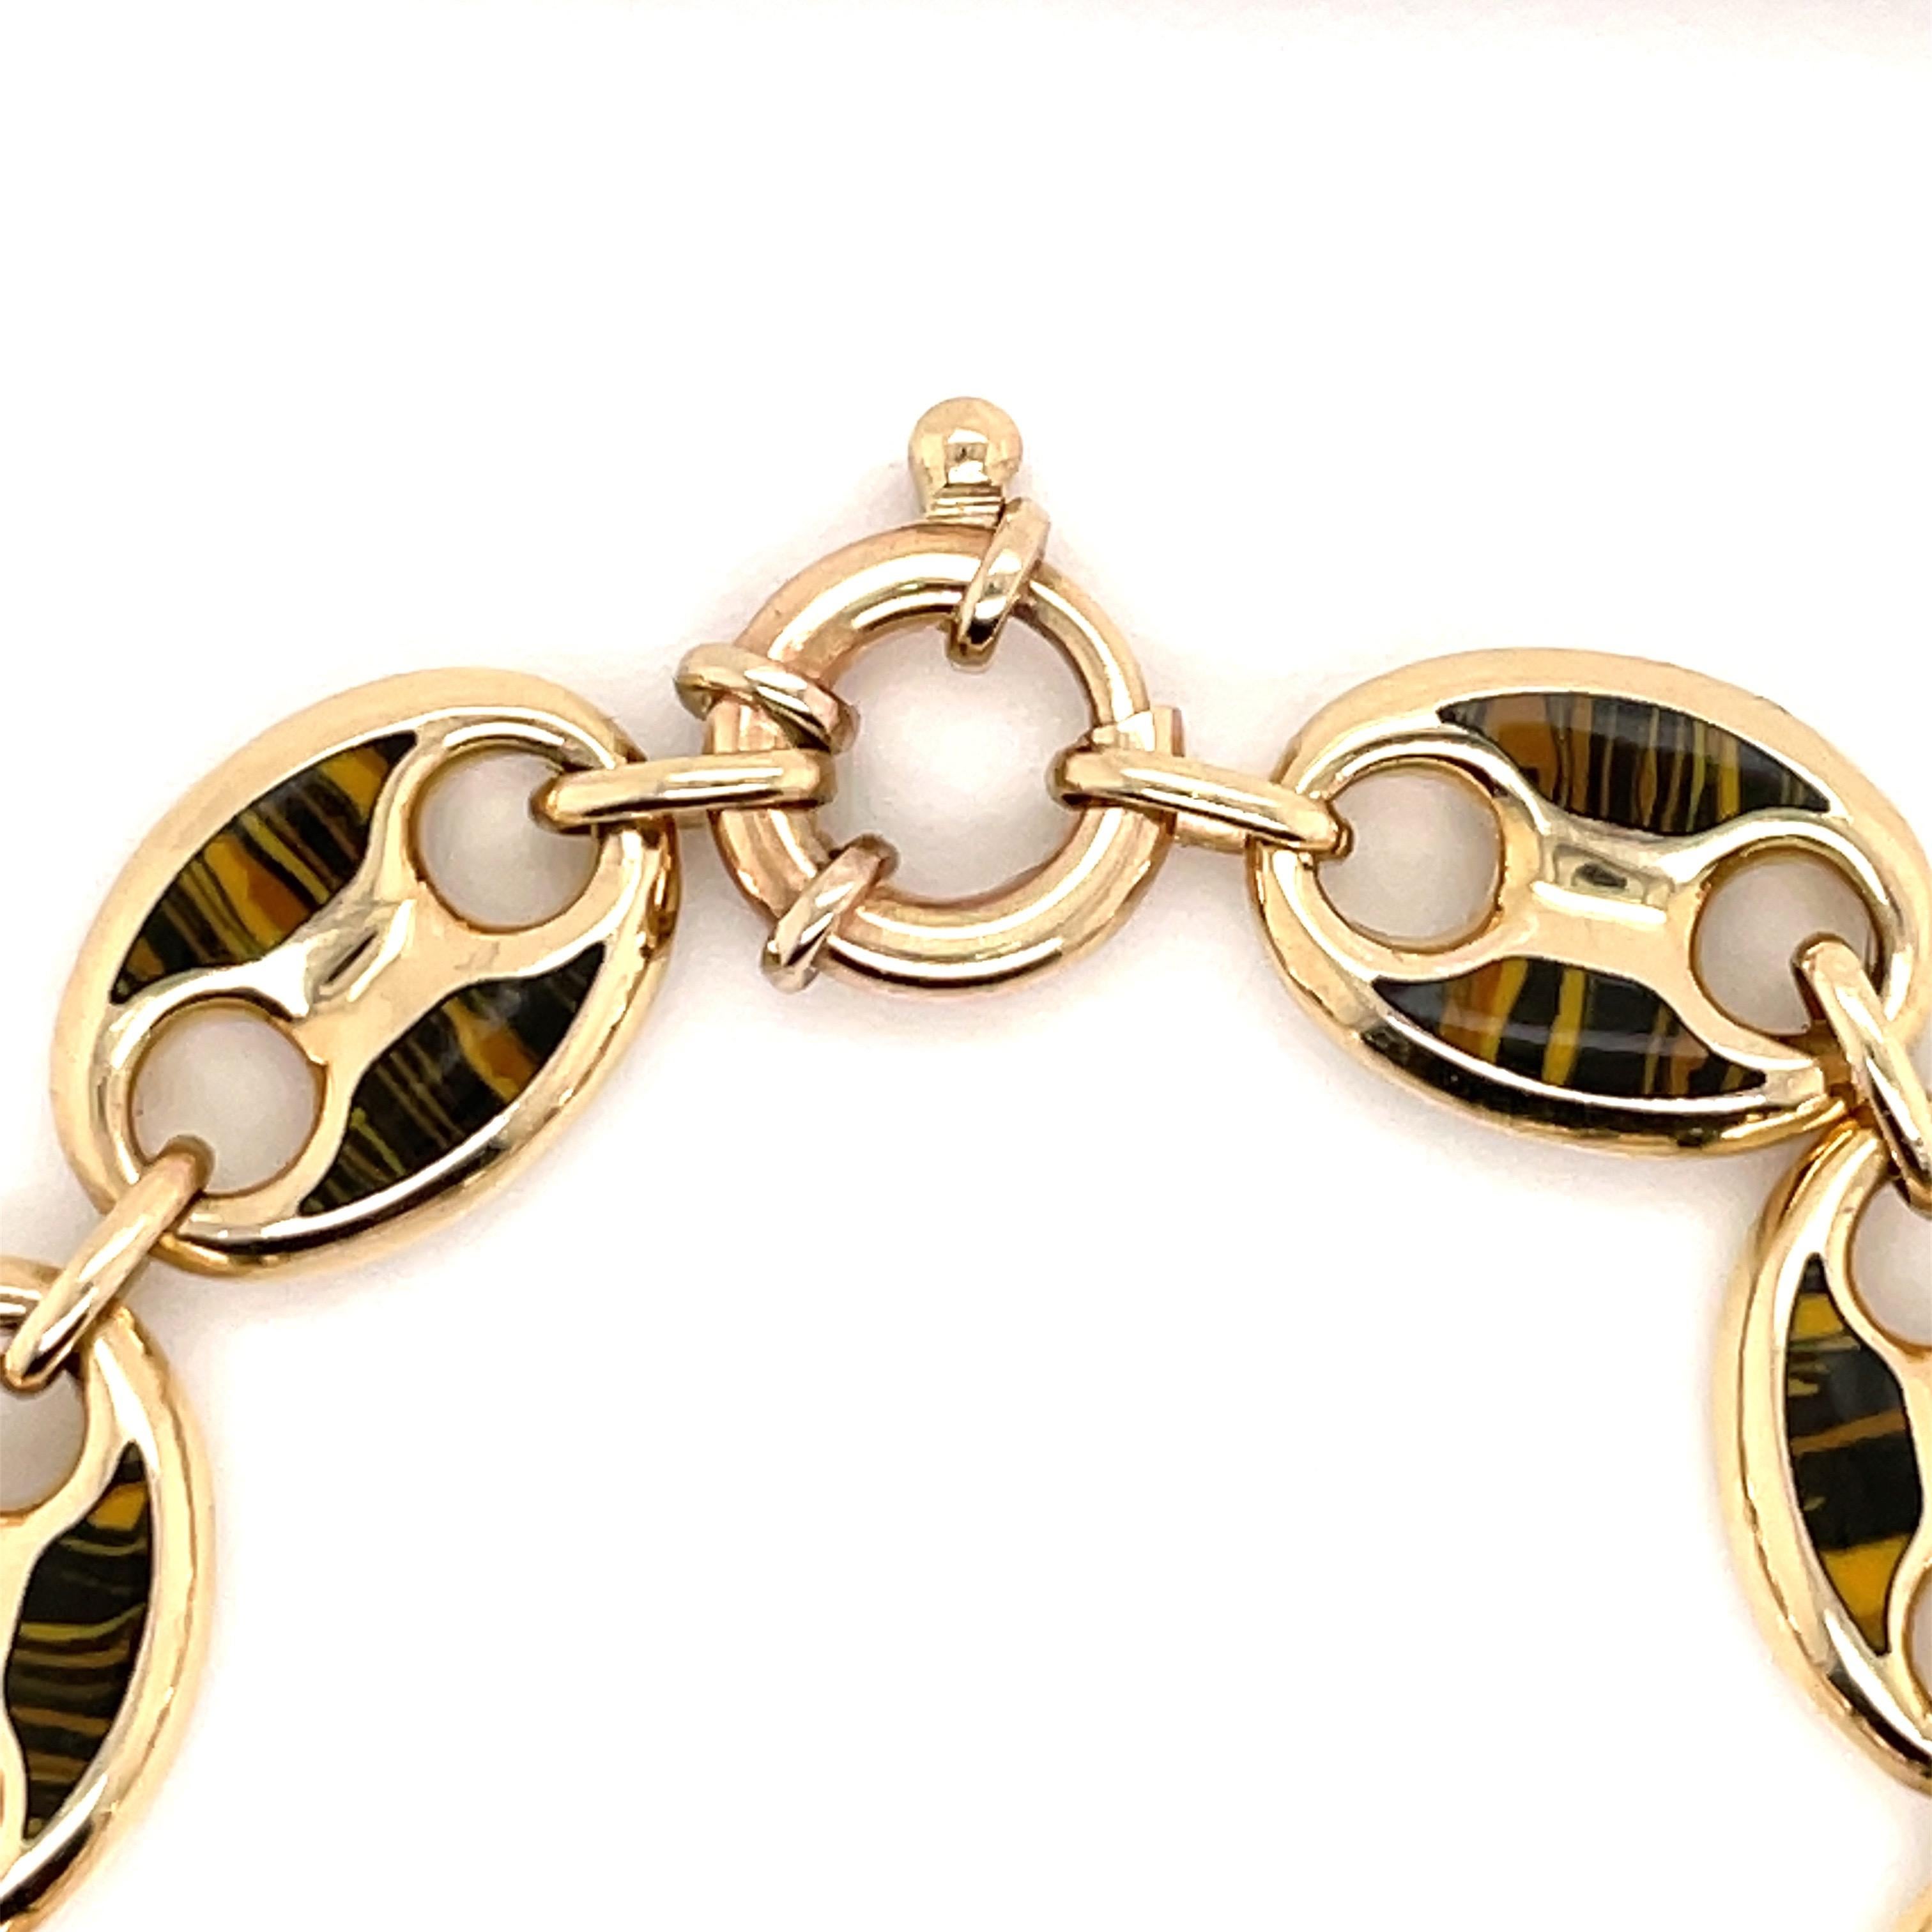 Taille ovale Bracelet italien à maillons marins en or jaune 14 carats, 15,9 grammes